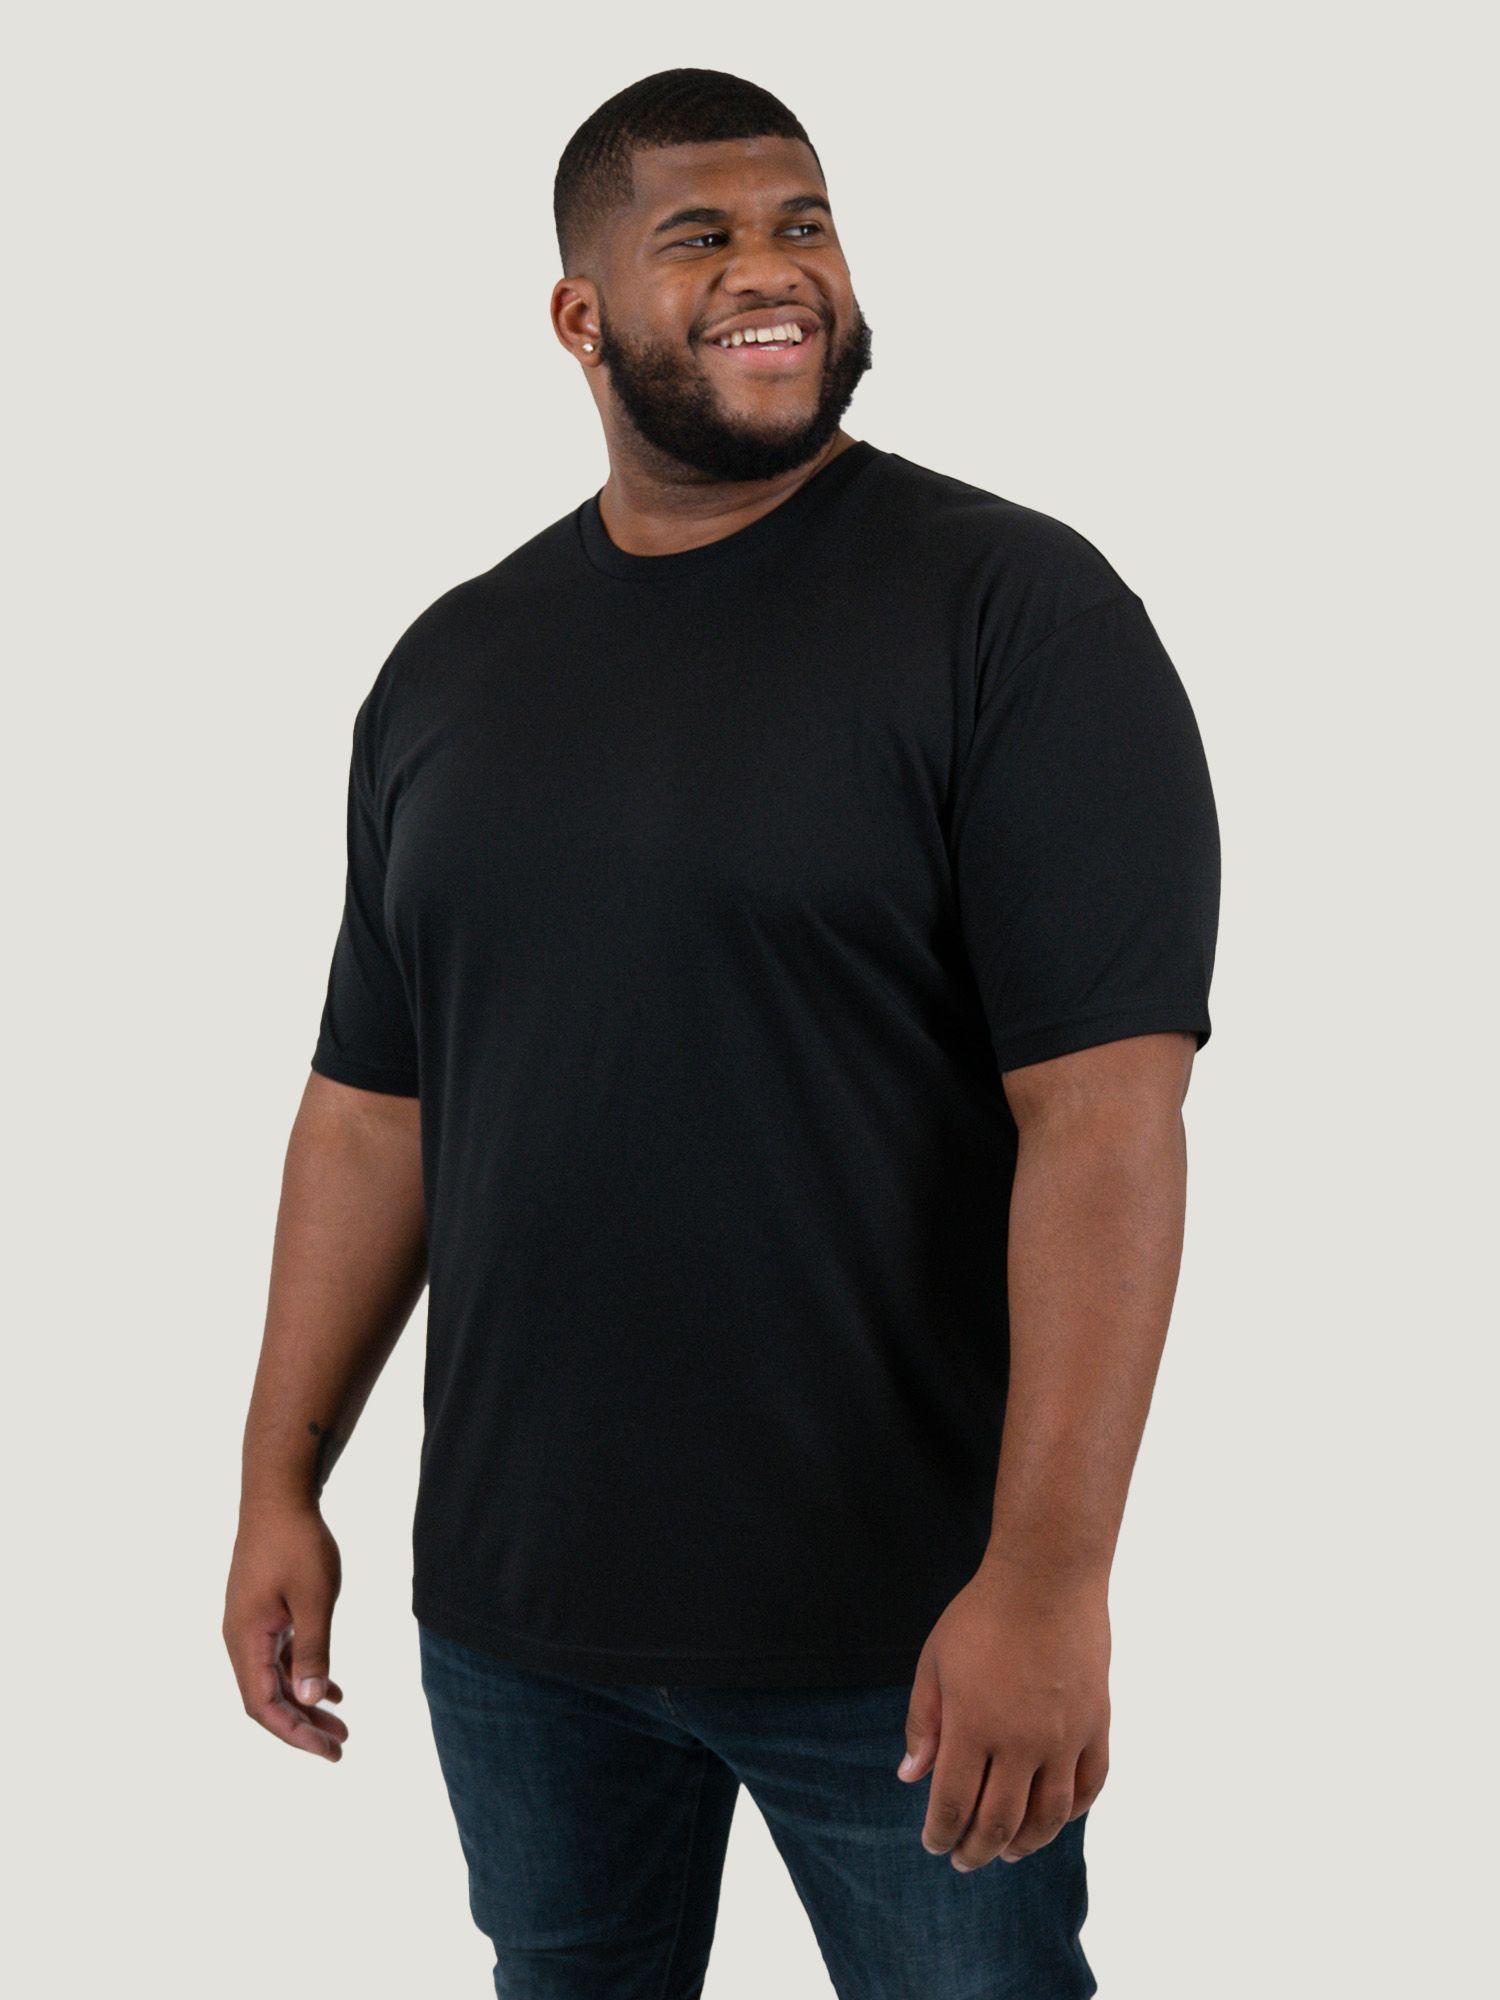 Black Crew Neck Tee | T-Shirts For Men | Fresh Clean Tees